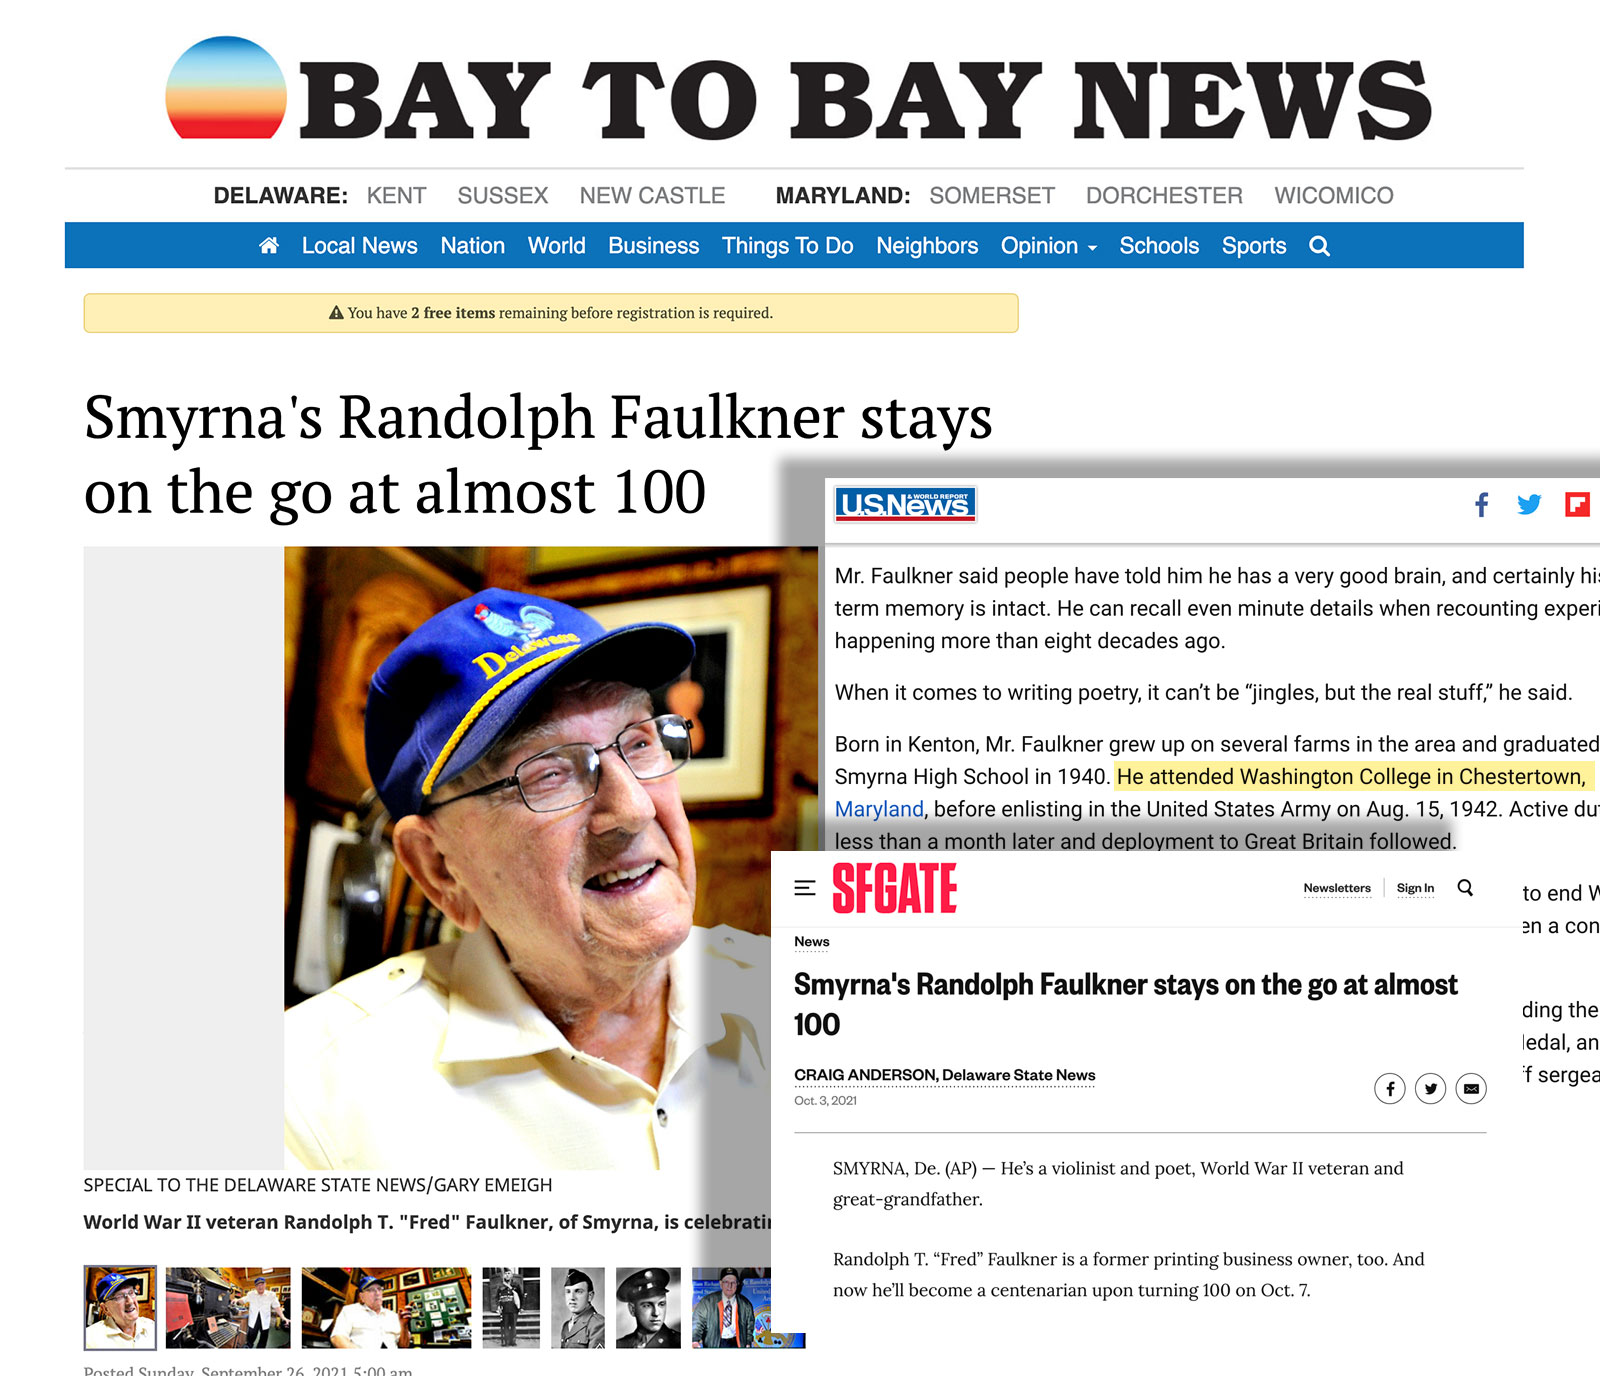 News coverage of Randolph Faulkner